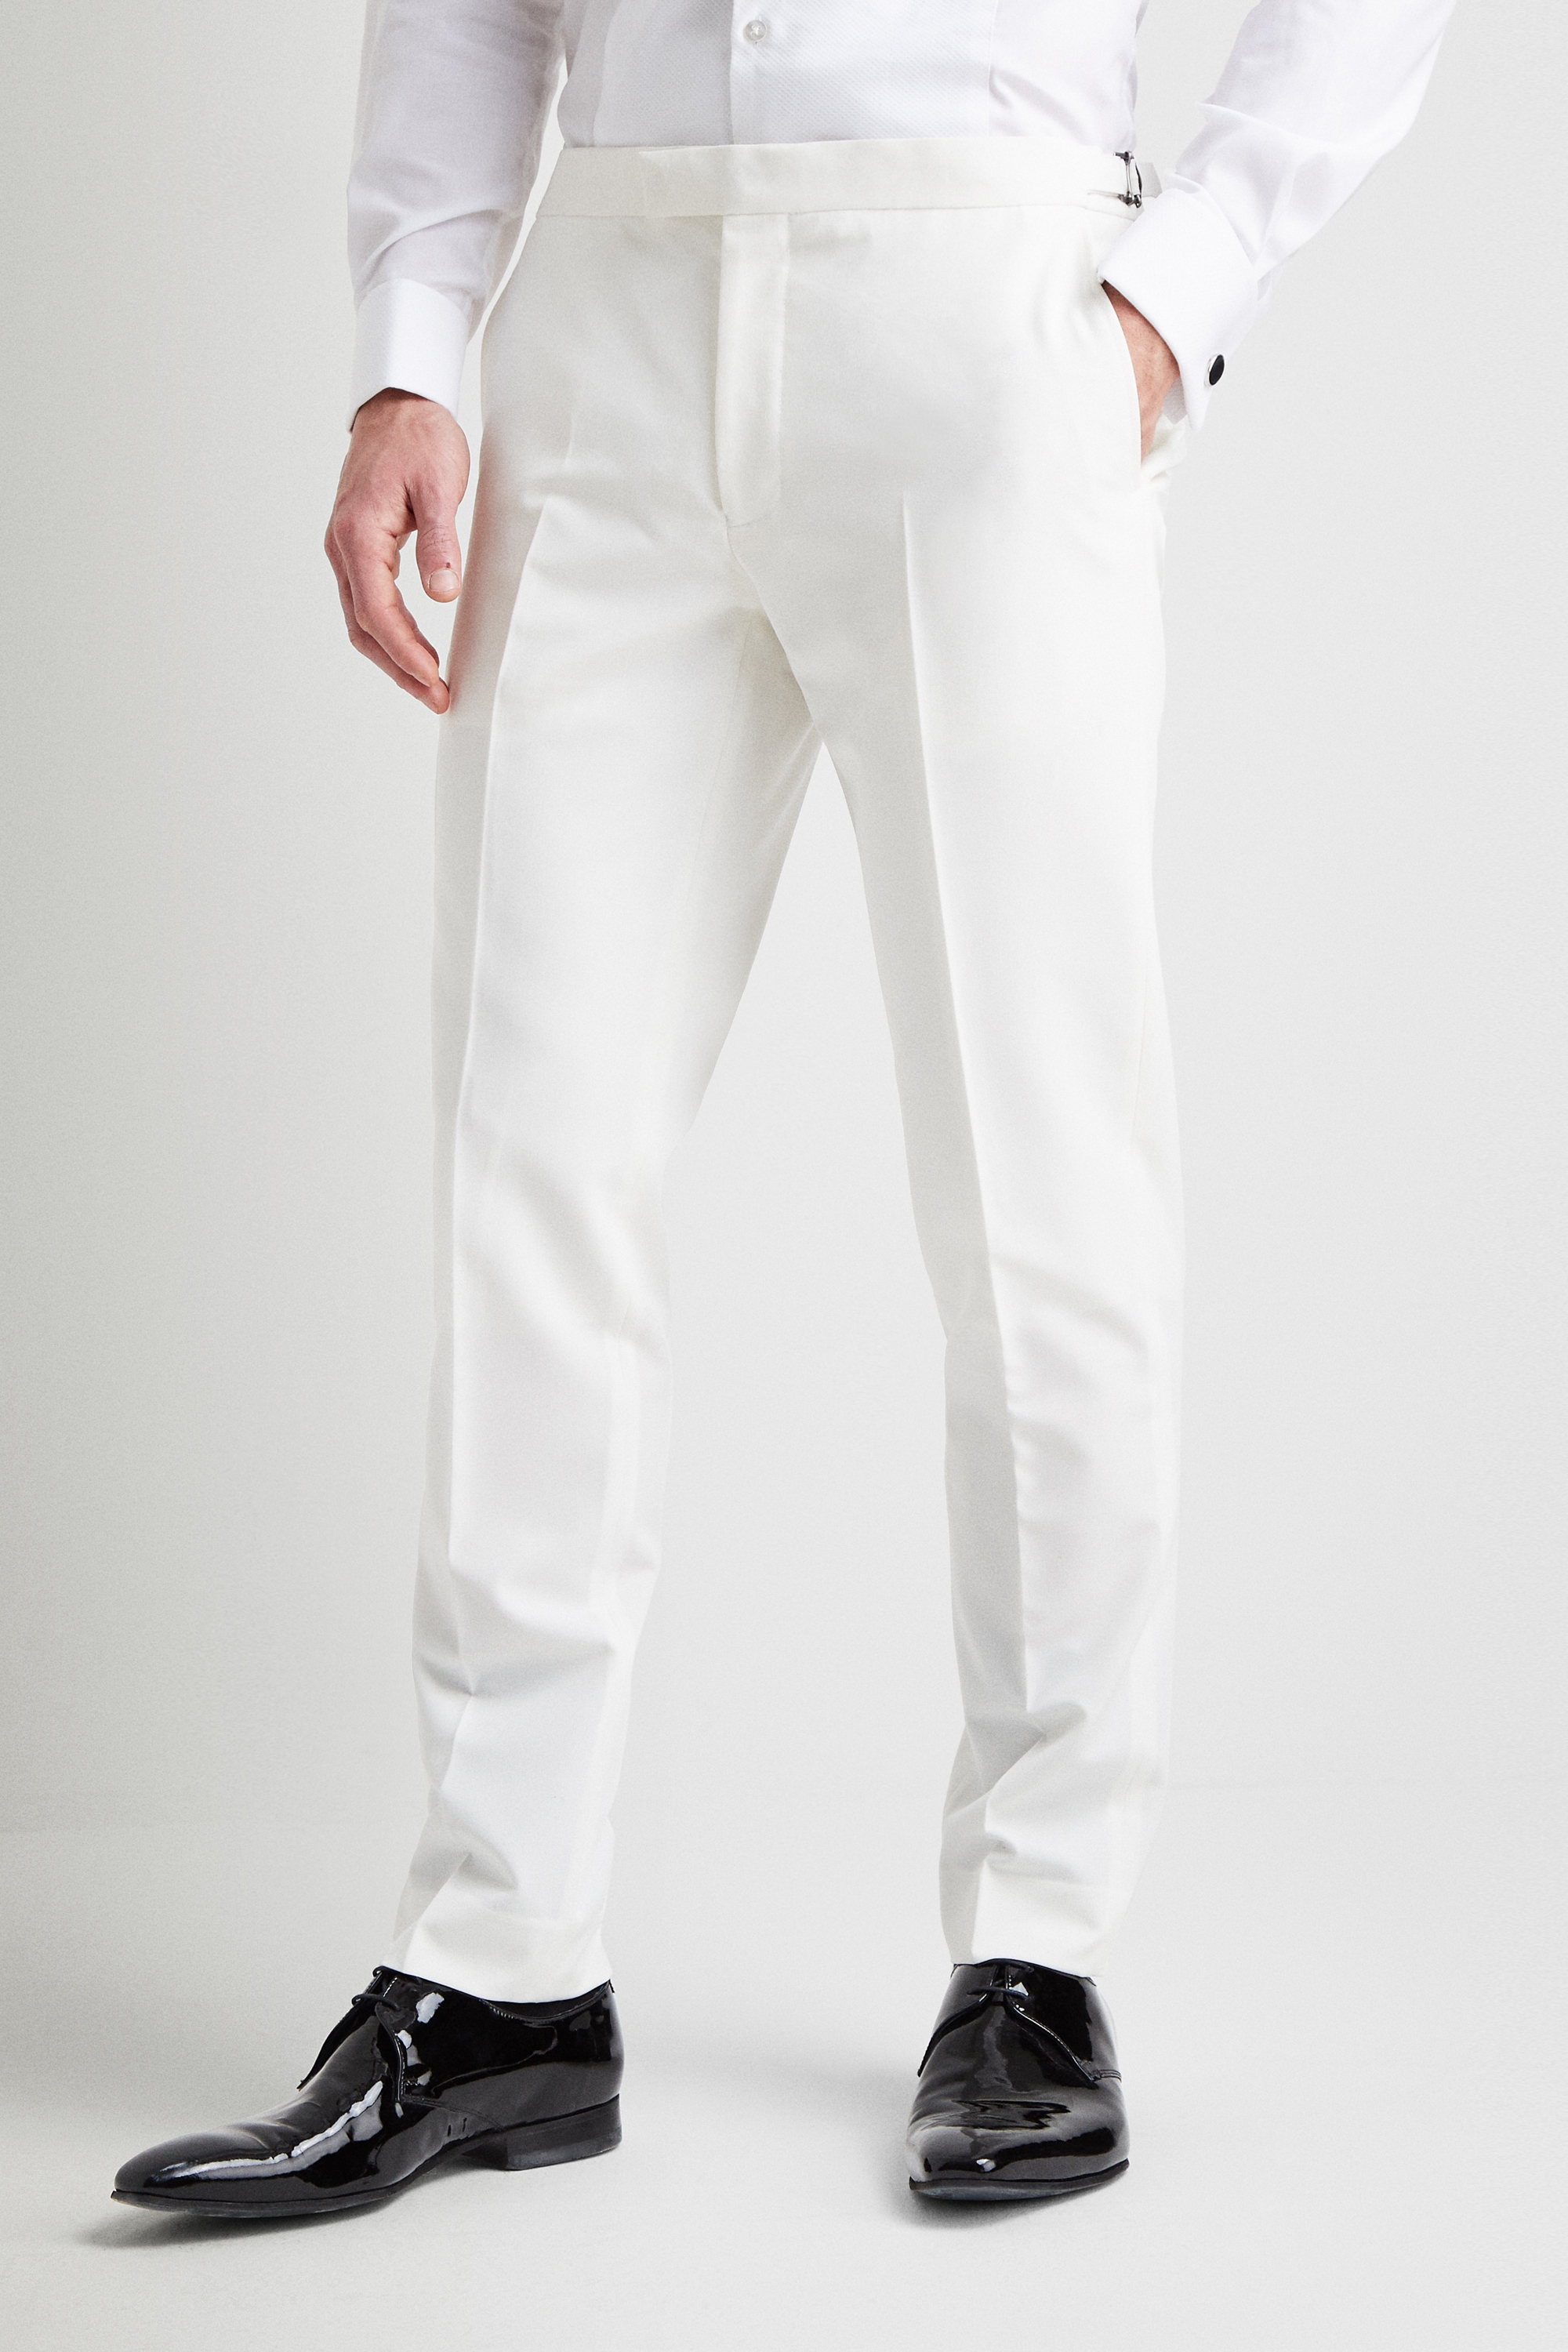 Hong Kong Star Spring Ripped Beggar White Jeans Men Slim fit Feet Korean  Style Stretch Long Pants Boys Fashion | Lazada